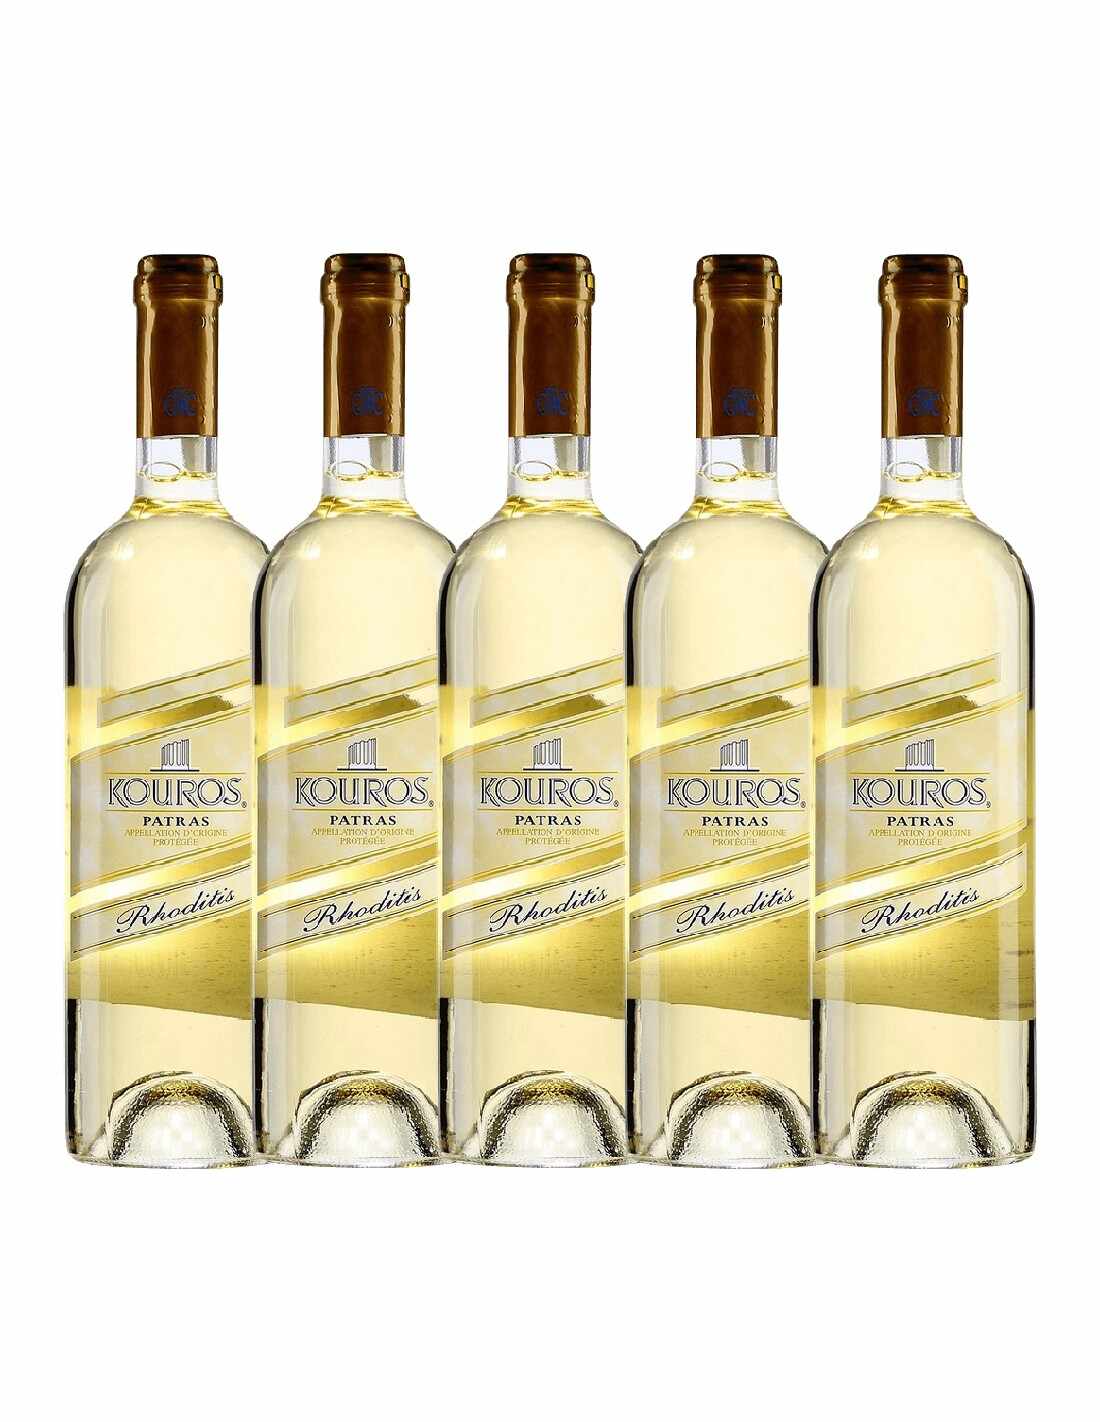 Pachet 5 sticle Vin alb sec Kouros, Nemeas, 12.5% alc., 0.75L, Grecia